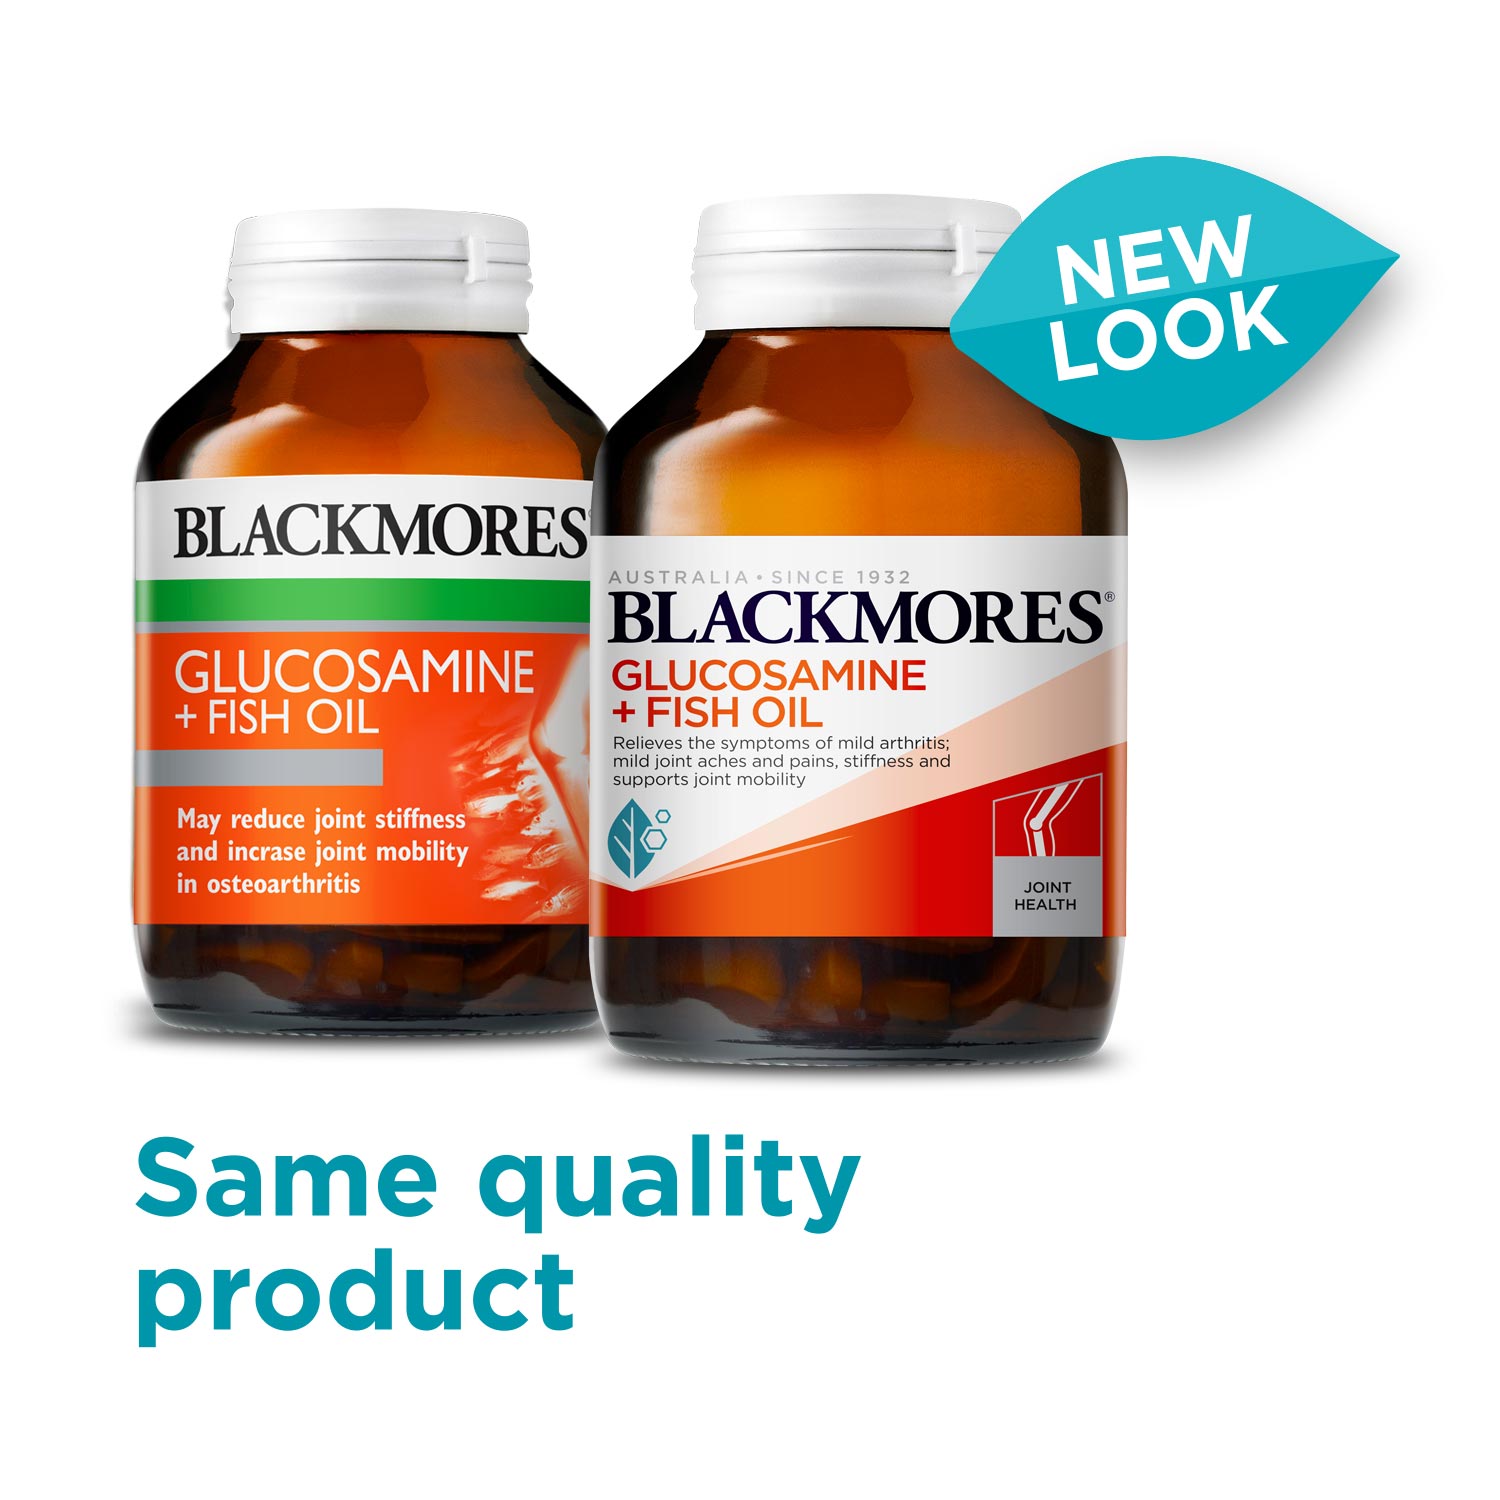 Blackmores Glucosamine + Fish Oil new look label